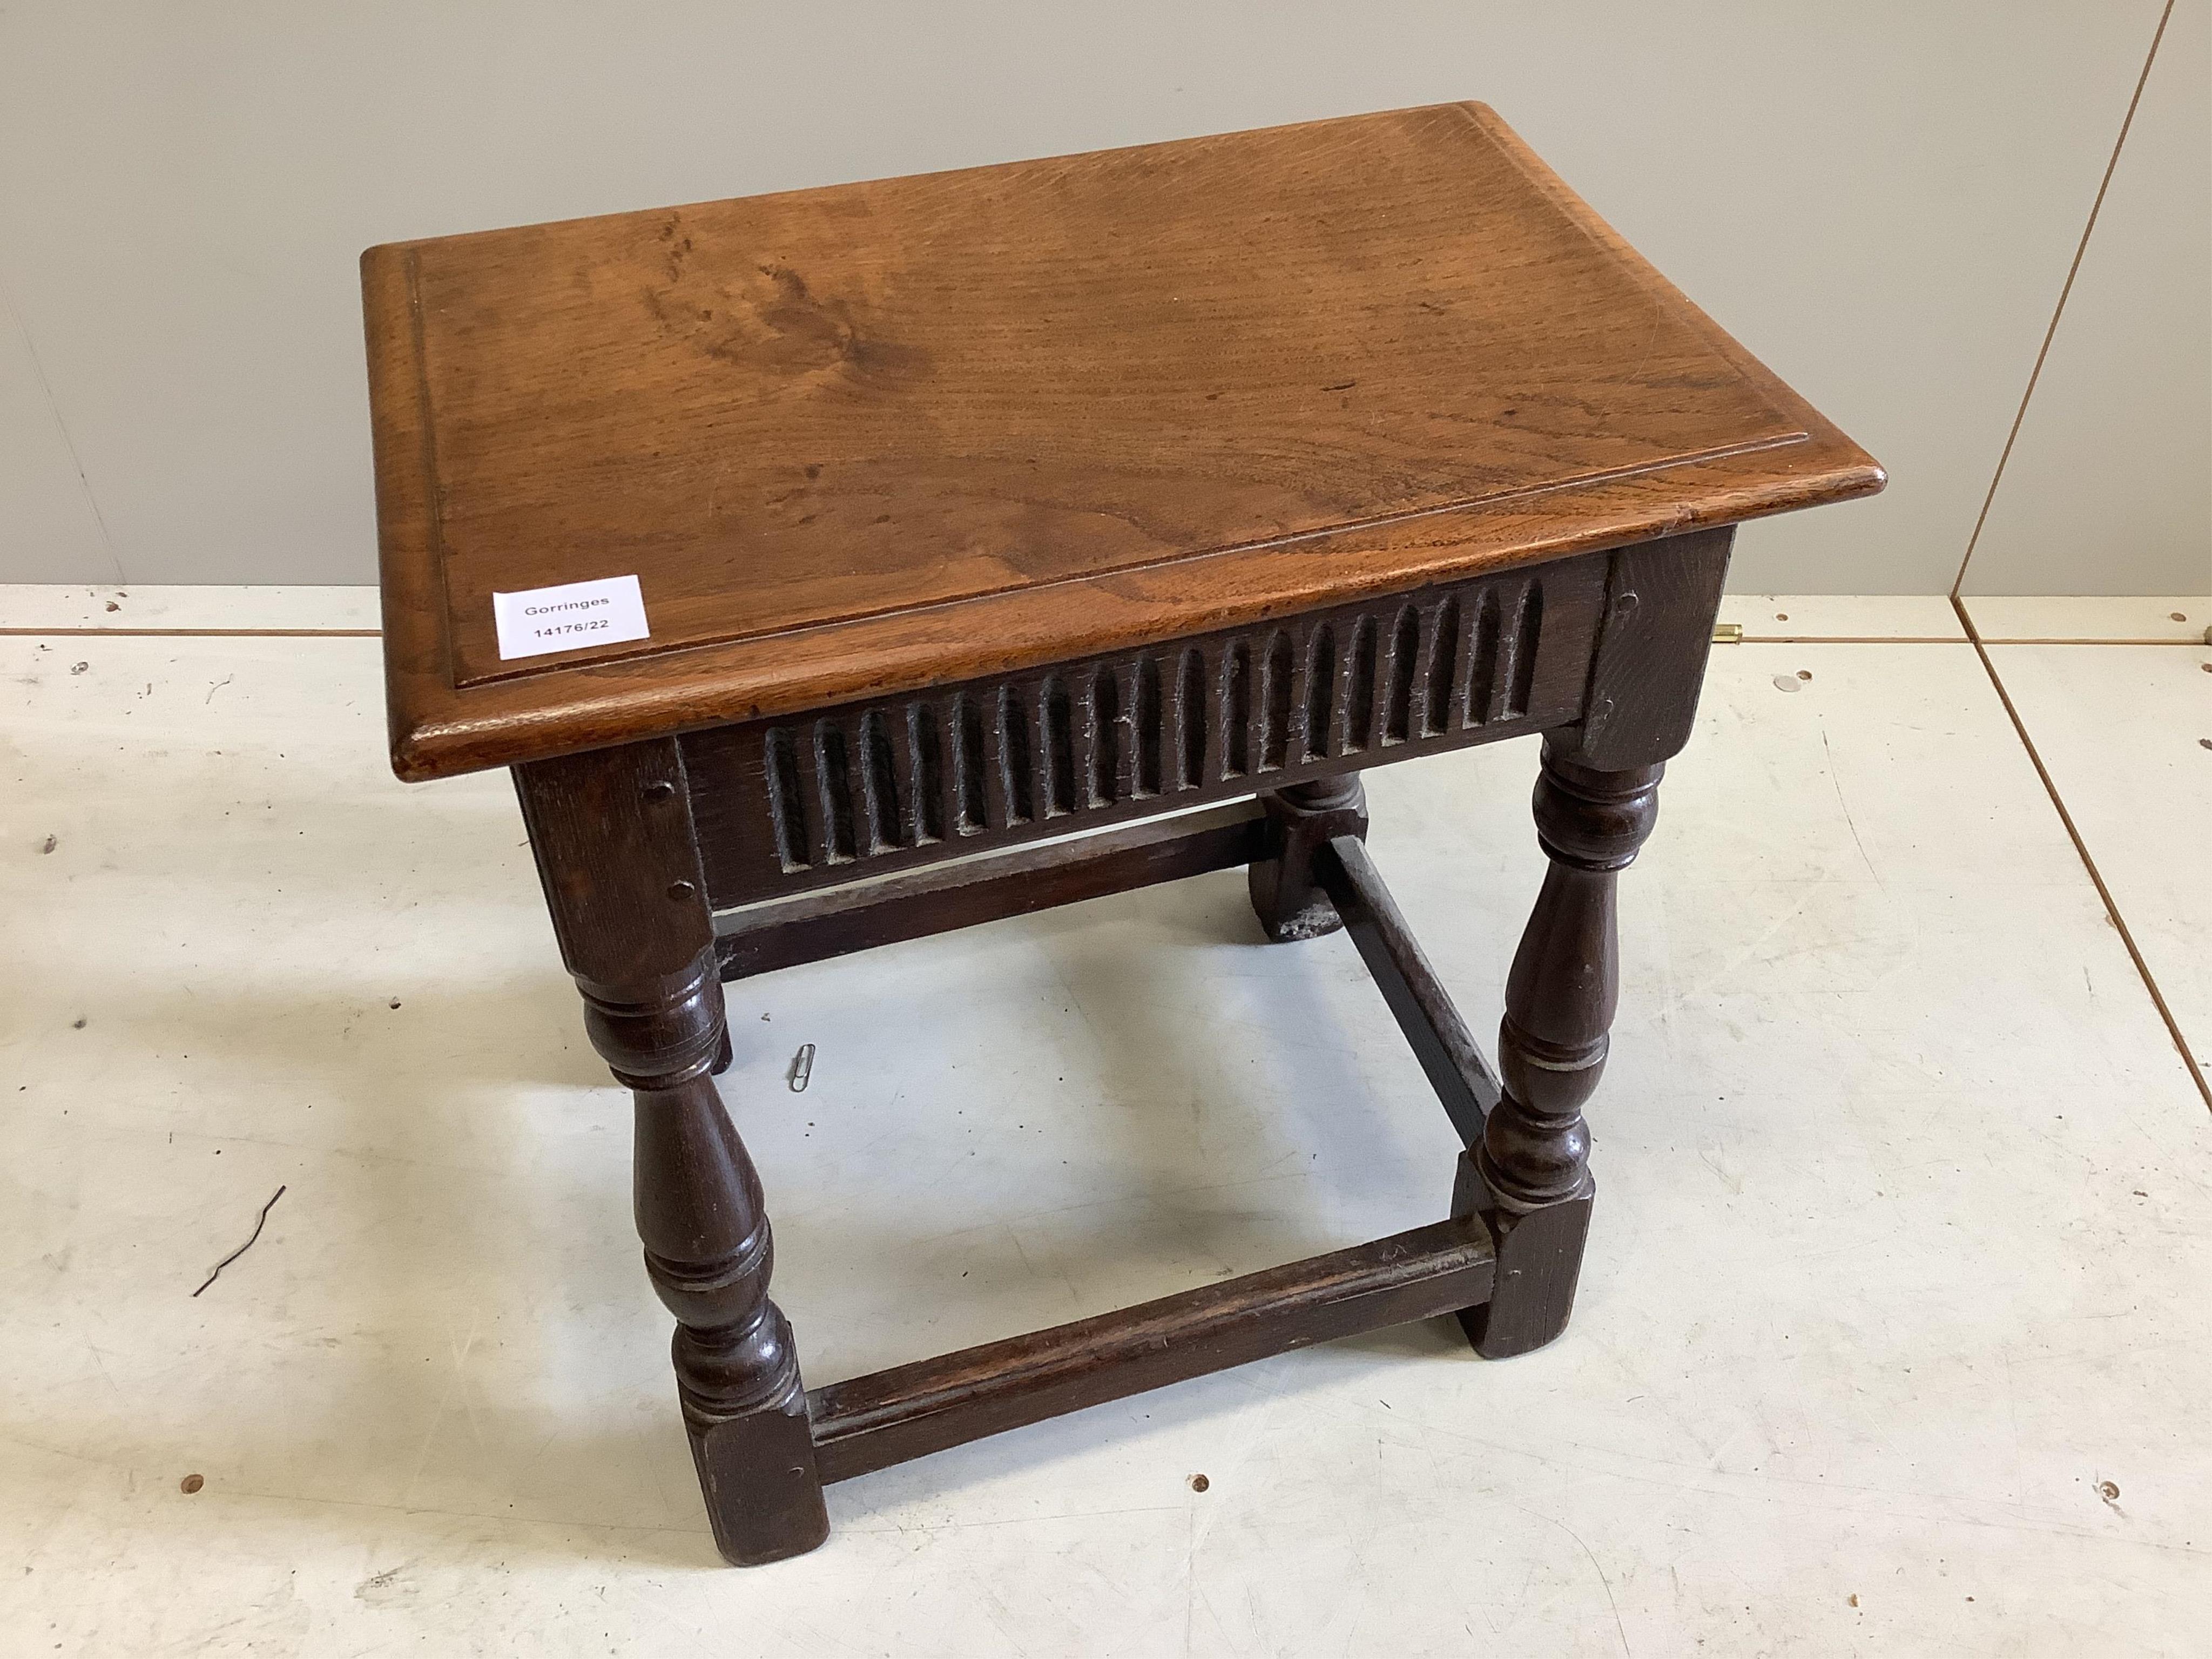 A 17th century style oak joint stool, width 46cm, depth 30cm, height 47cm. Condition - fair